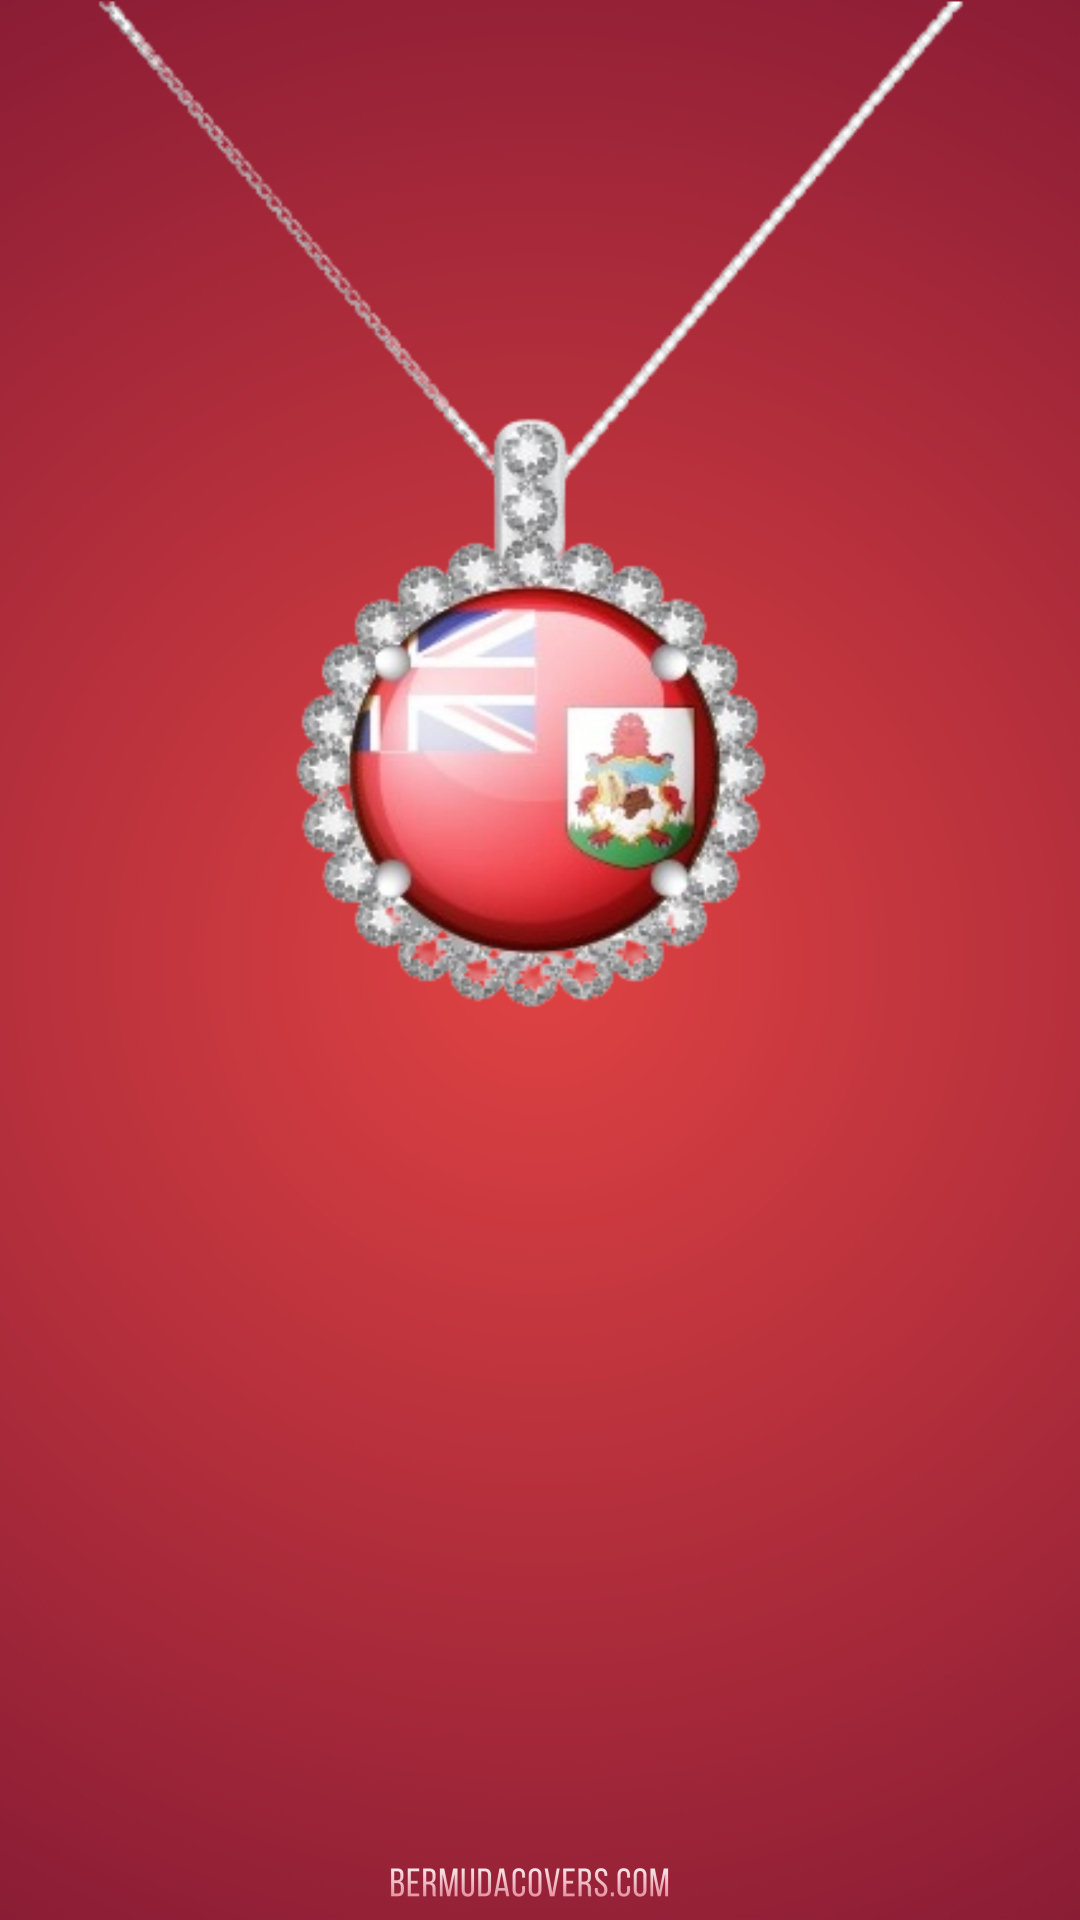 Bermuda Flag Jewel Look Necklace Bernews Mobile phone wallpaper lock screen design image photo YyDNzgMO